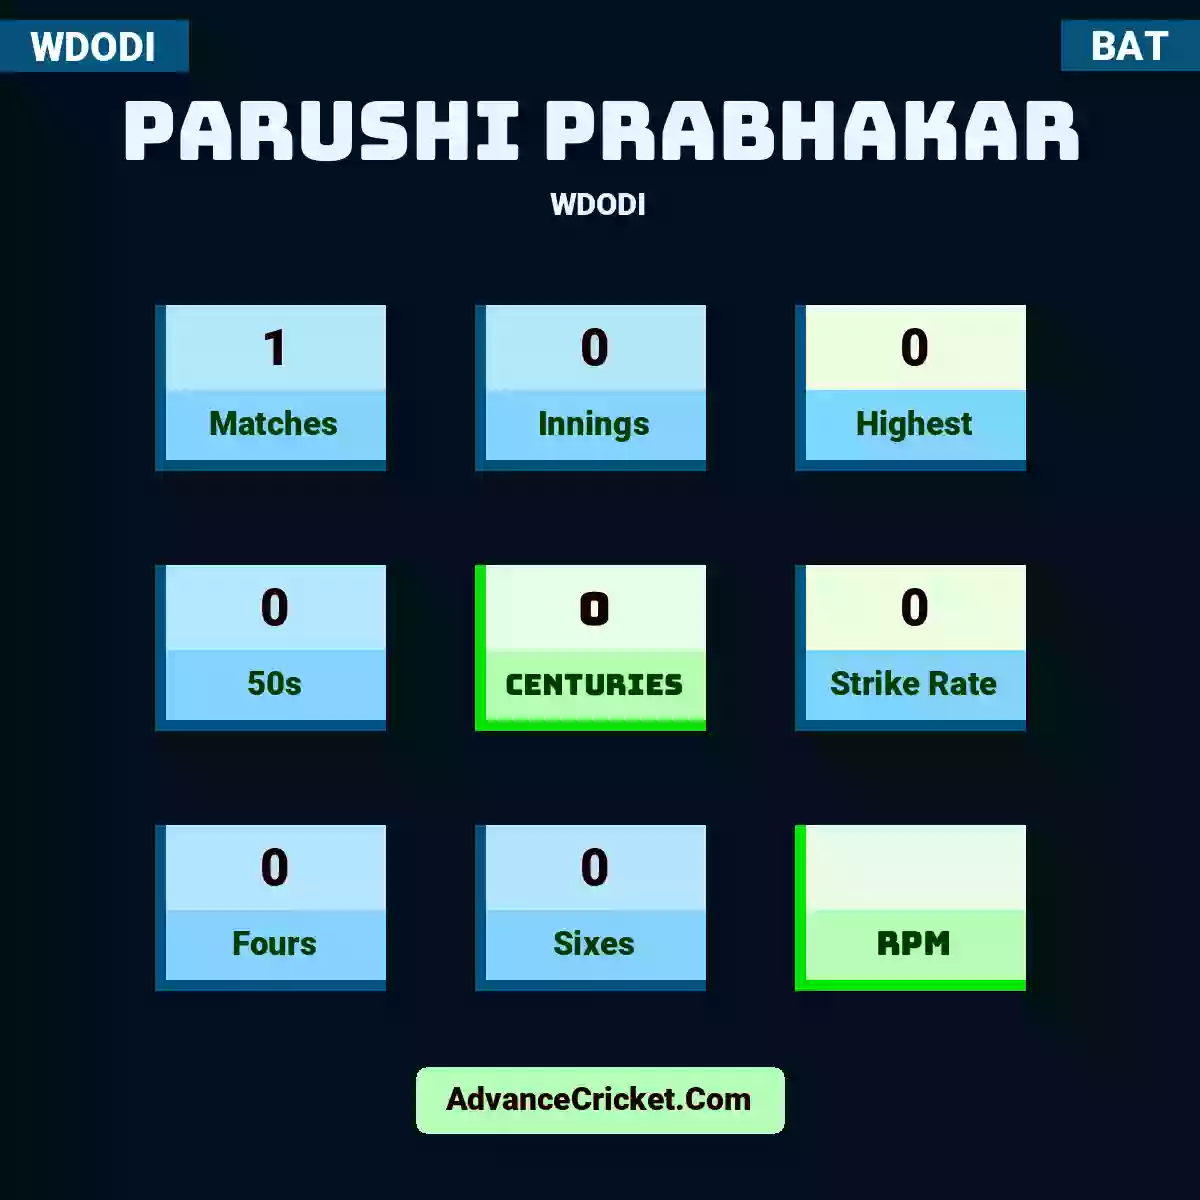 Parushi Prabhakar WDODI , Parushi Prabhakar played 1 matches, scored 0 runs as highest, 0 half-centuries, and 0 centuries, with a strike rate of 0. P.Prabhakar hit 0 fours and 0 sixes.